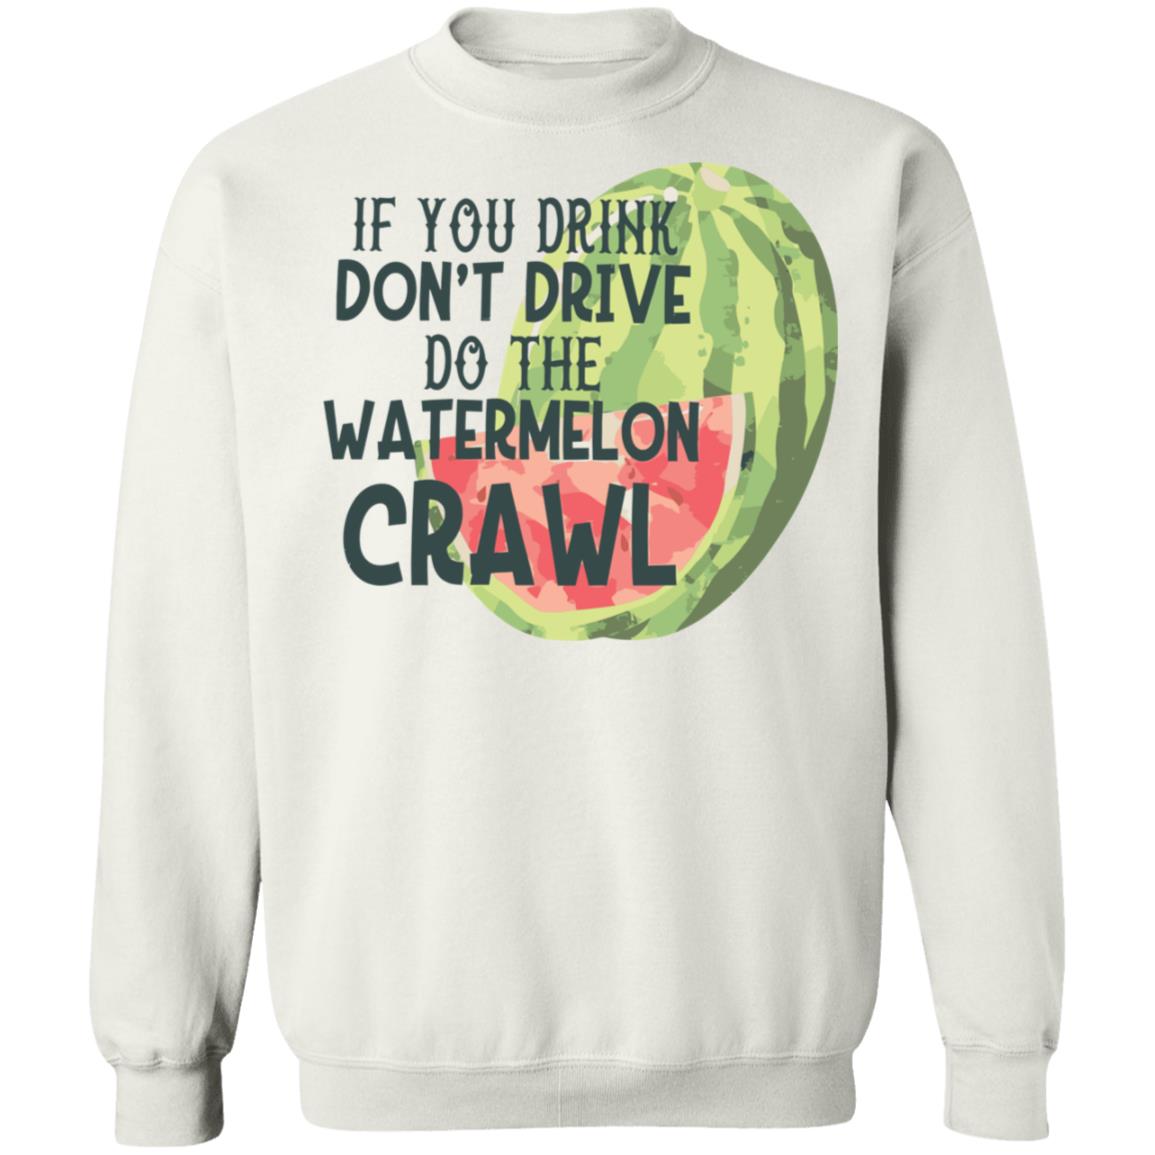 If You Drink Don’t Drive Watermelon Crawl Shirt 2